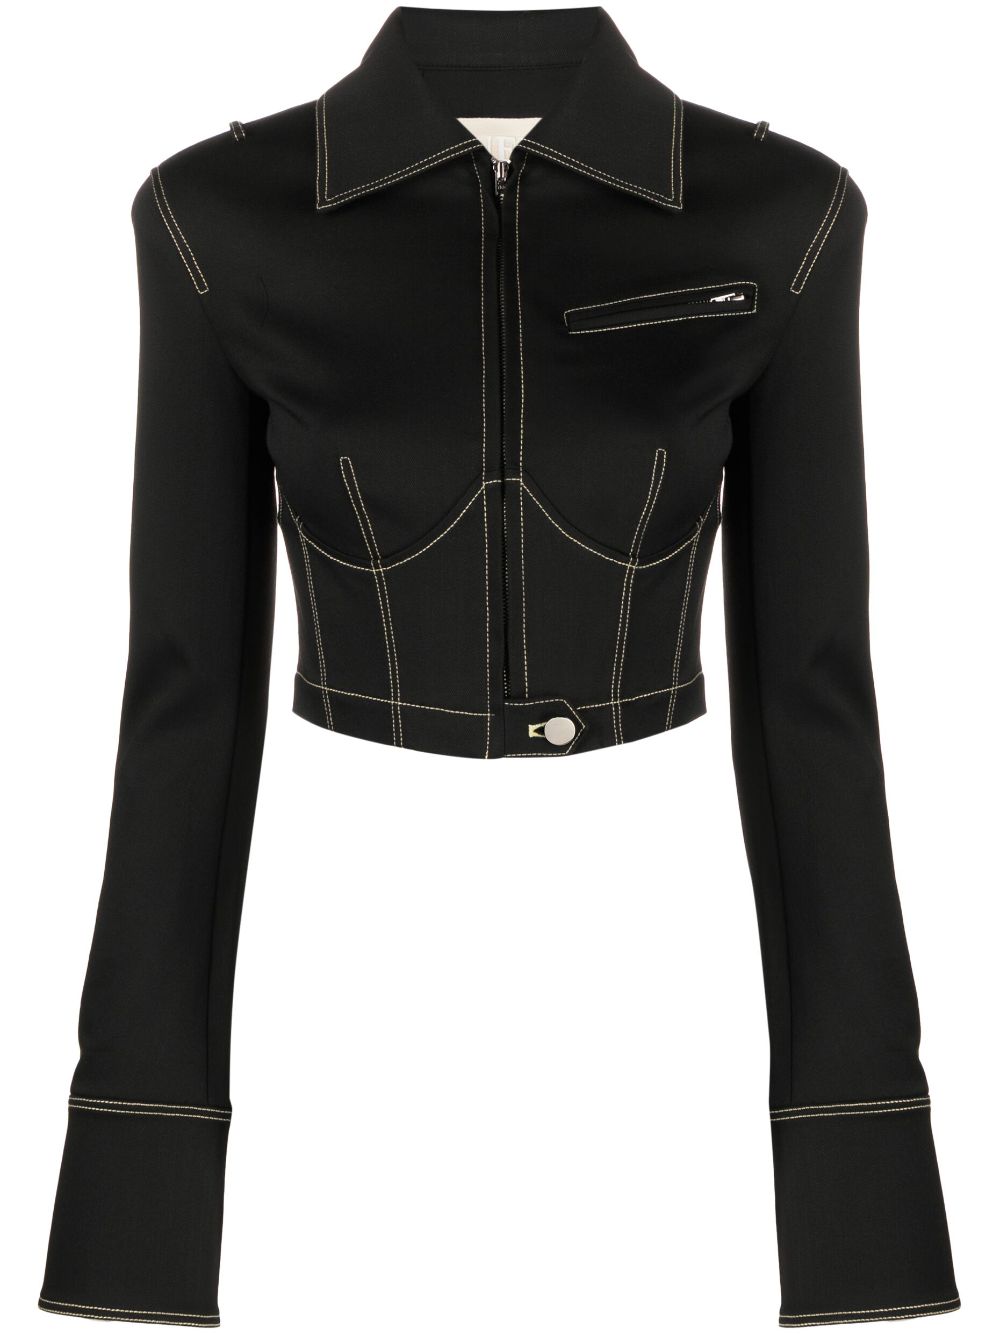 Juneyen corset-style cropped jacket